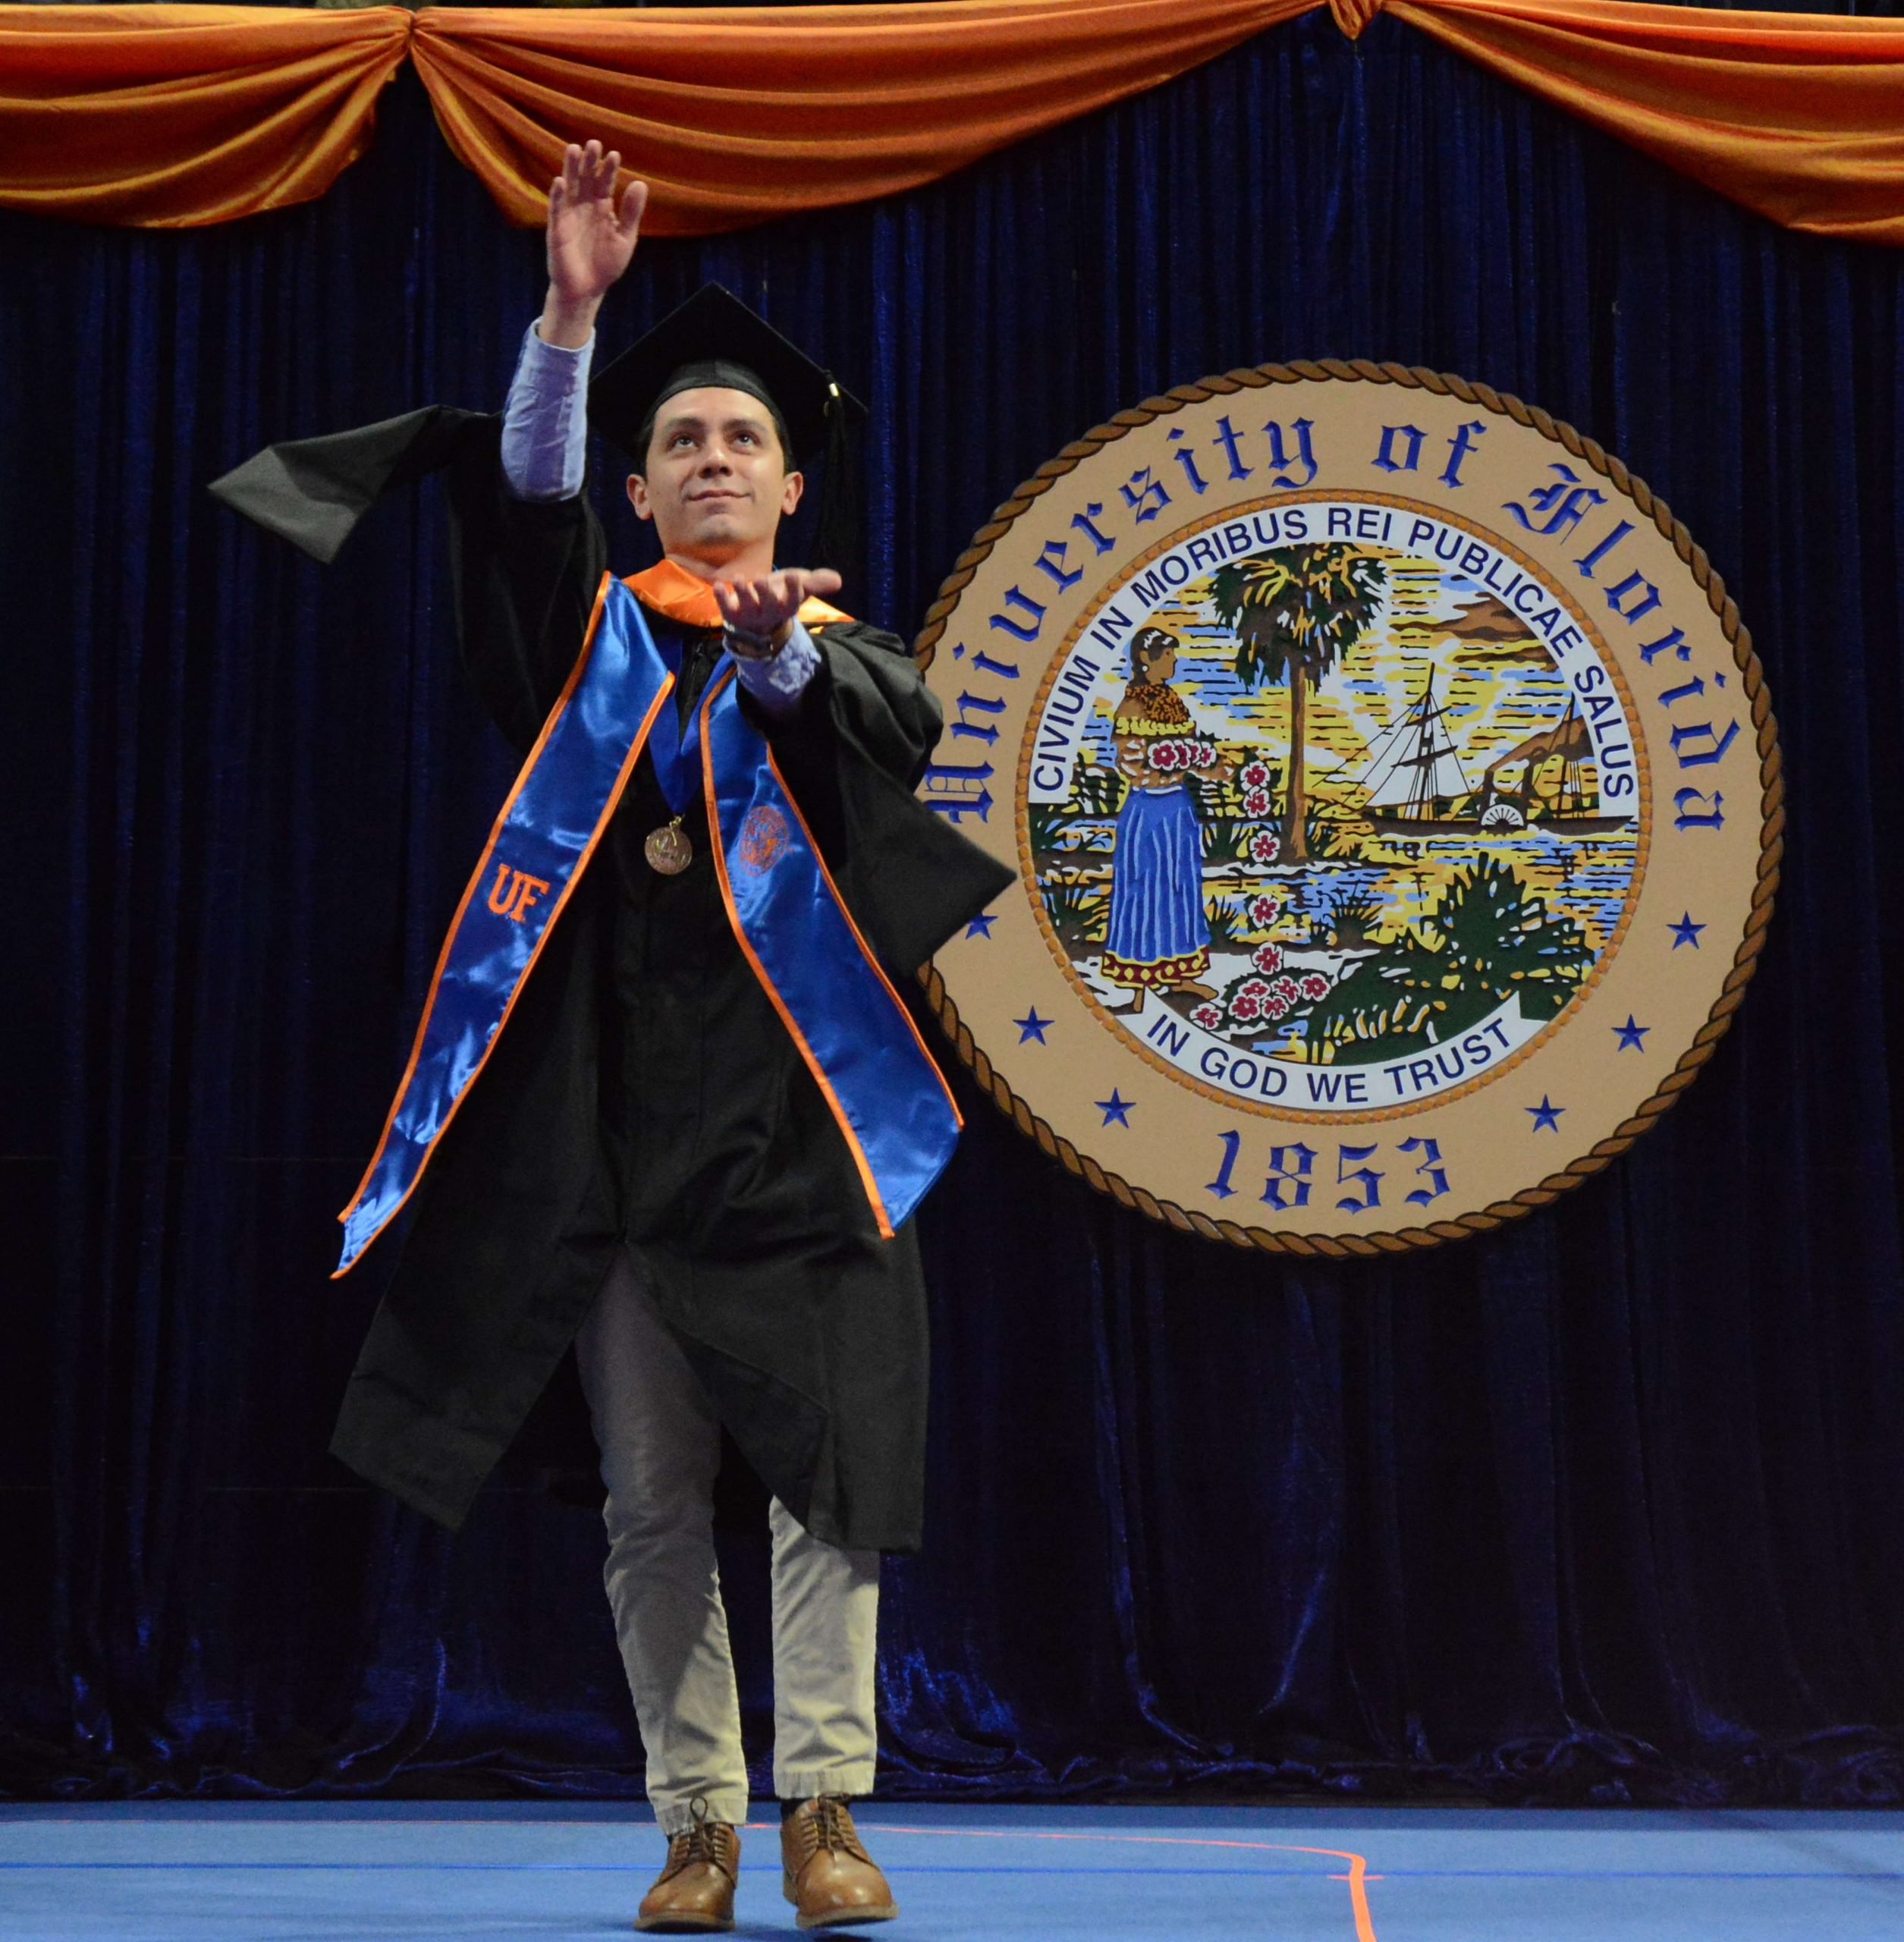 Matthew graduates with his Master’s degree!